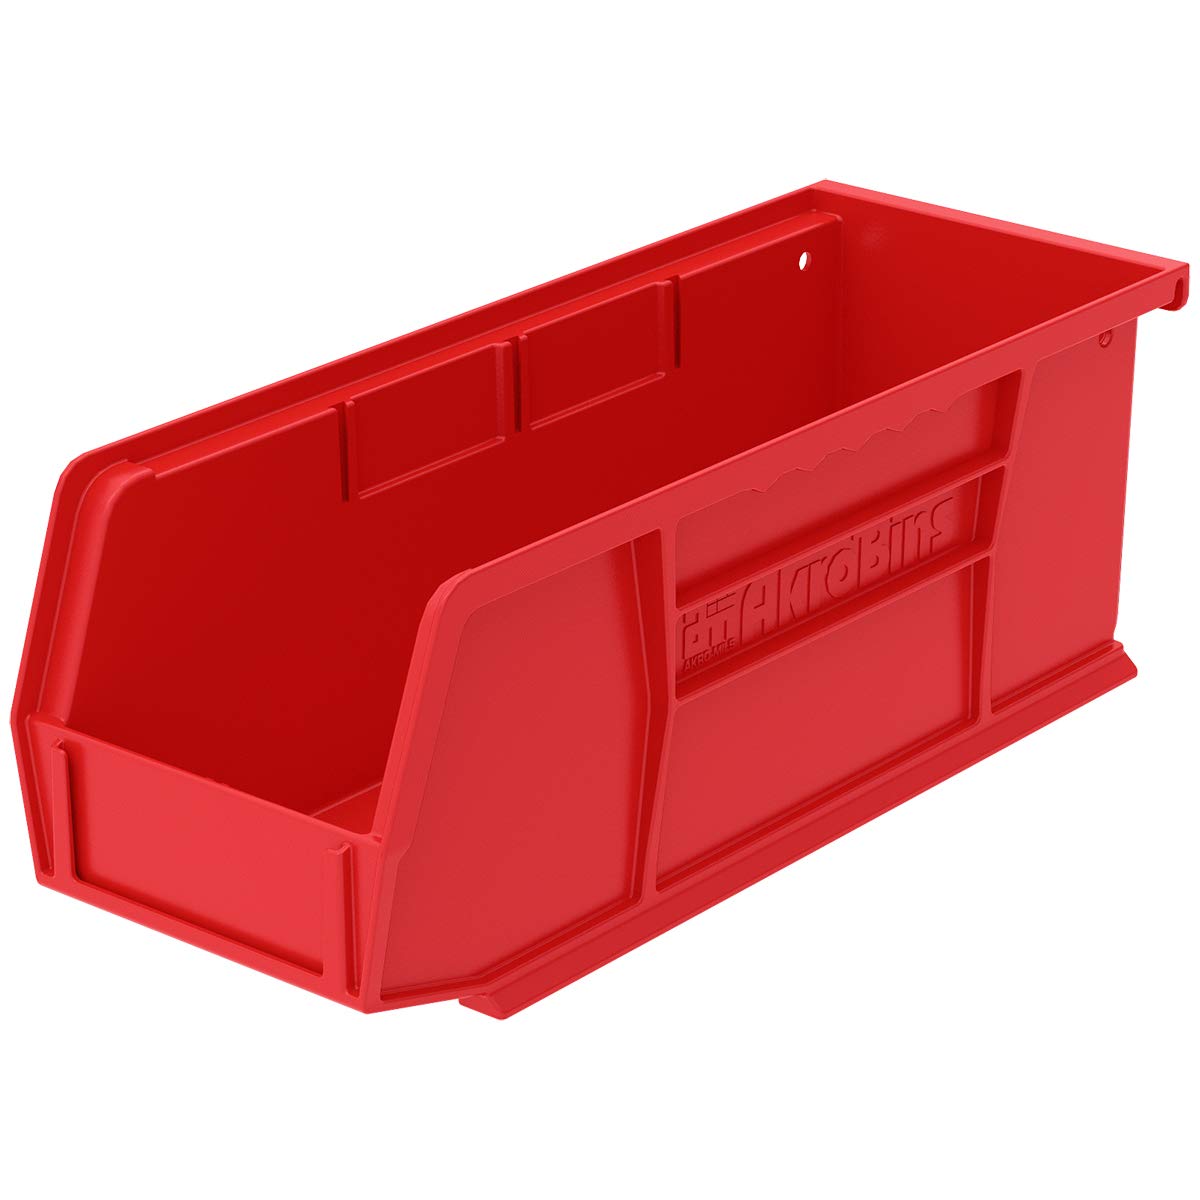 Akro-Mils 30224 AkroBins Plastic Hanging Stackable Storage Organizer Bin, 11-Inch x 4-Inch x 4-Inch, Red, 12-Pack